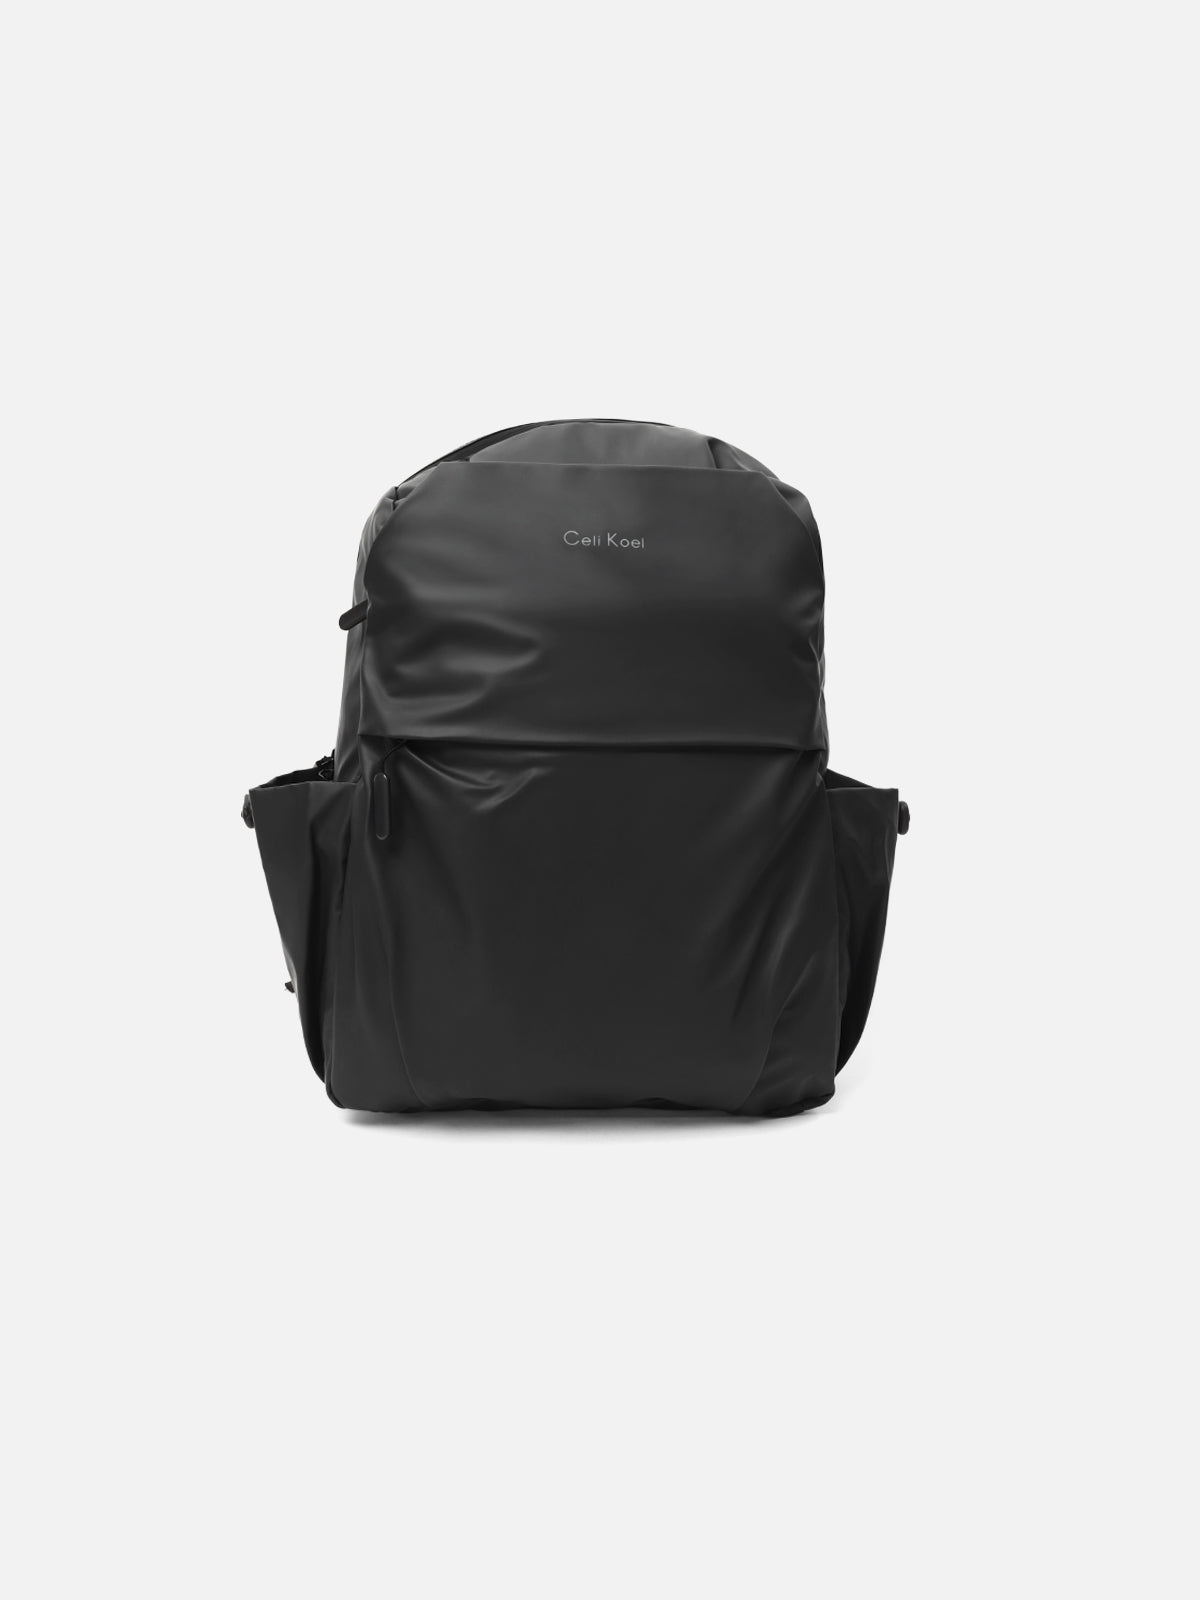 Black Backpack - FABG24-002